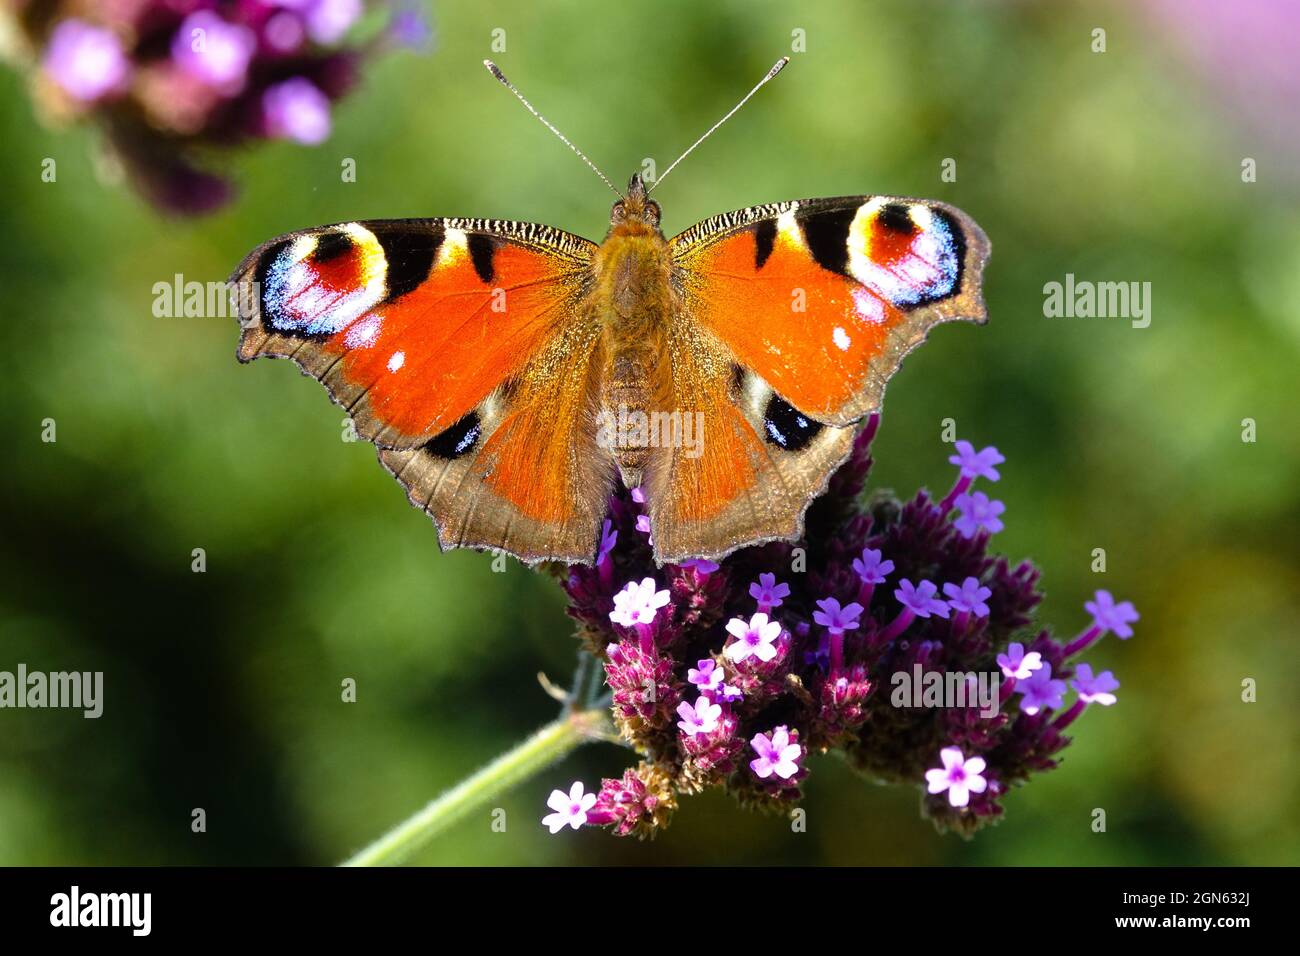 Aglais io basking European peacock butterfly on flower Stock Photo